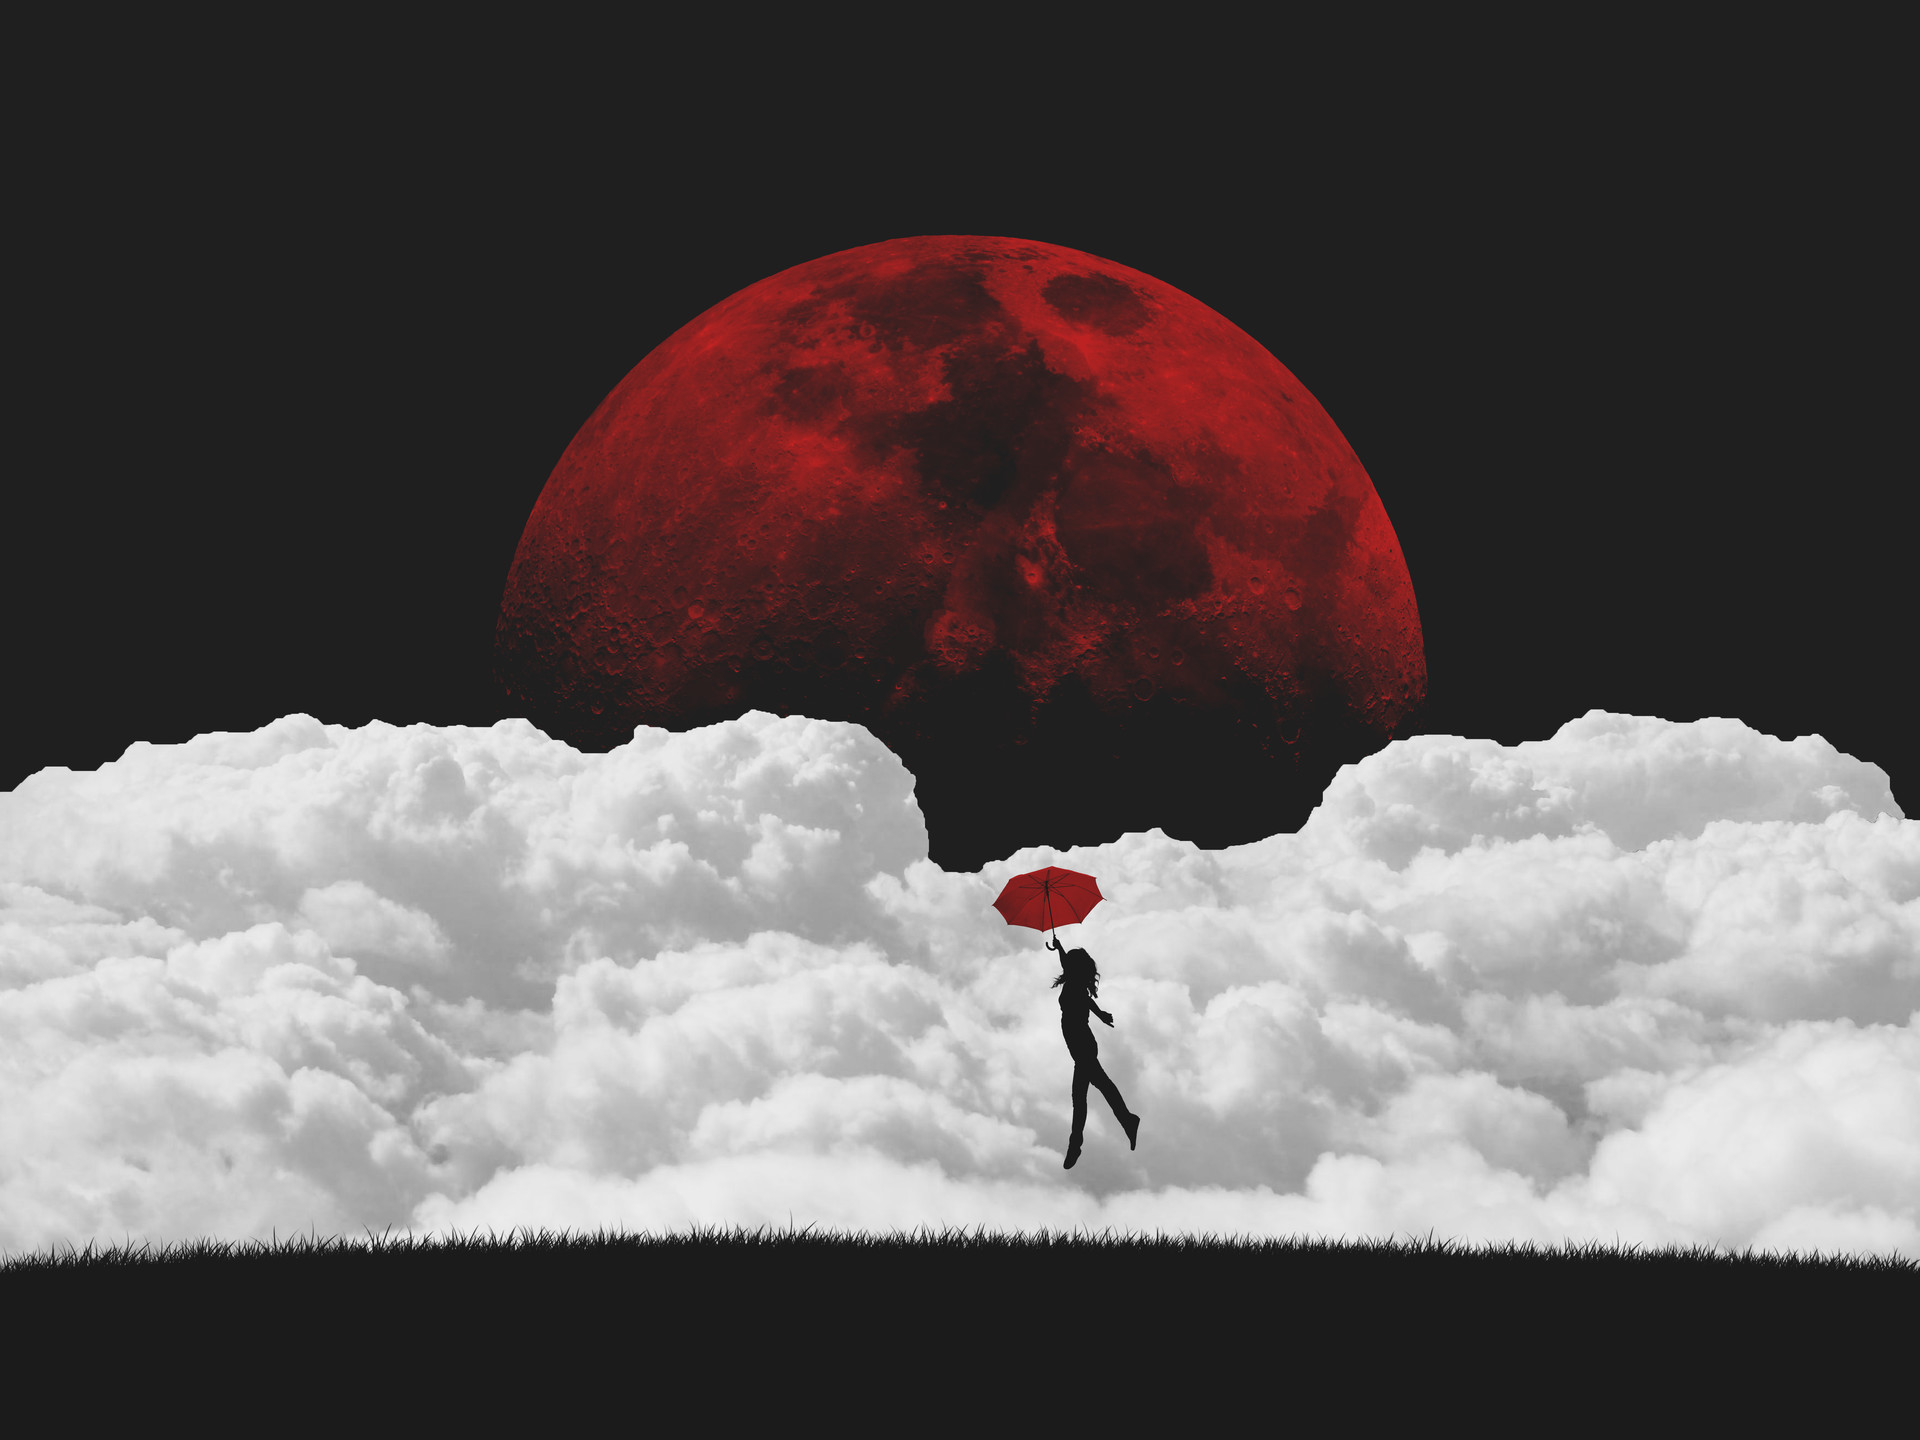 Digital Digital Art Artwork Fantasy Art Night Sky Skyscape Clouds Black White Red Dark Umbrella Red  1920x1440